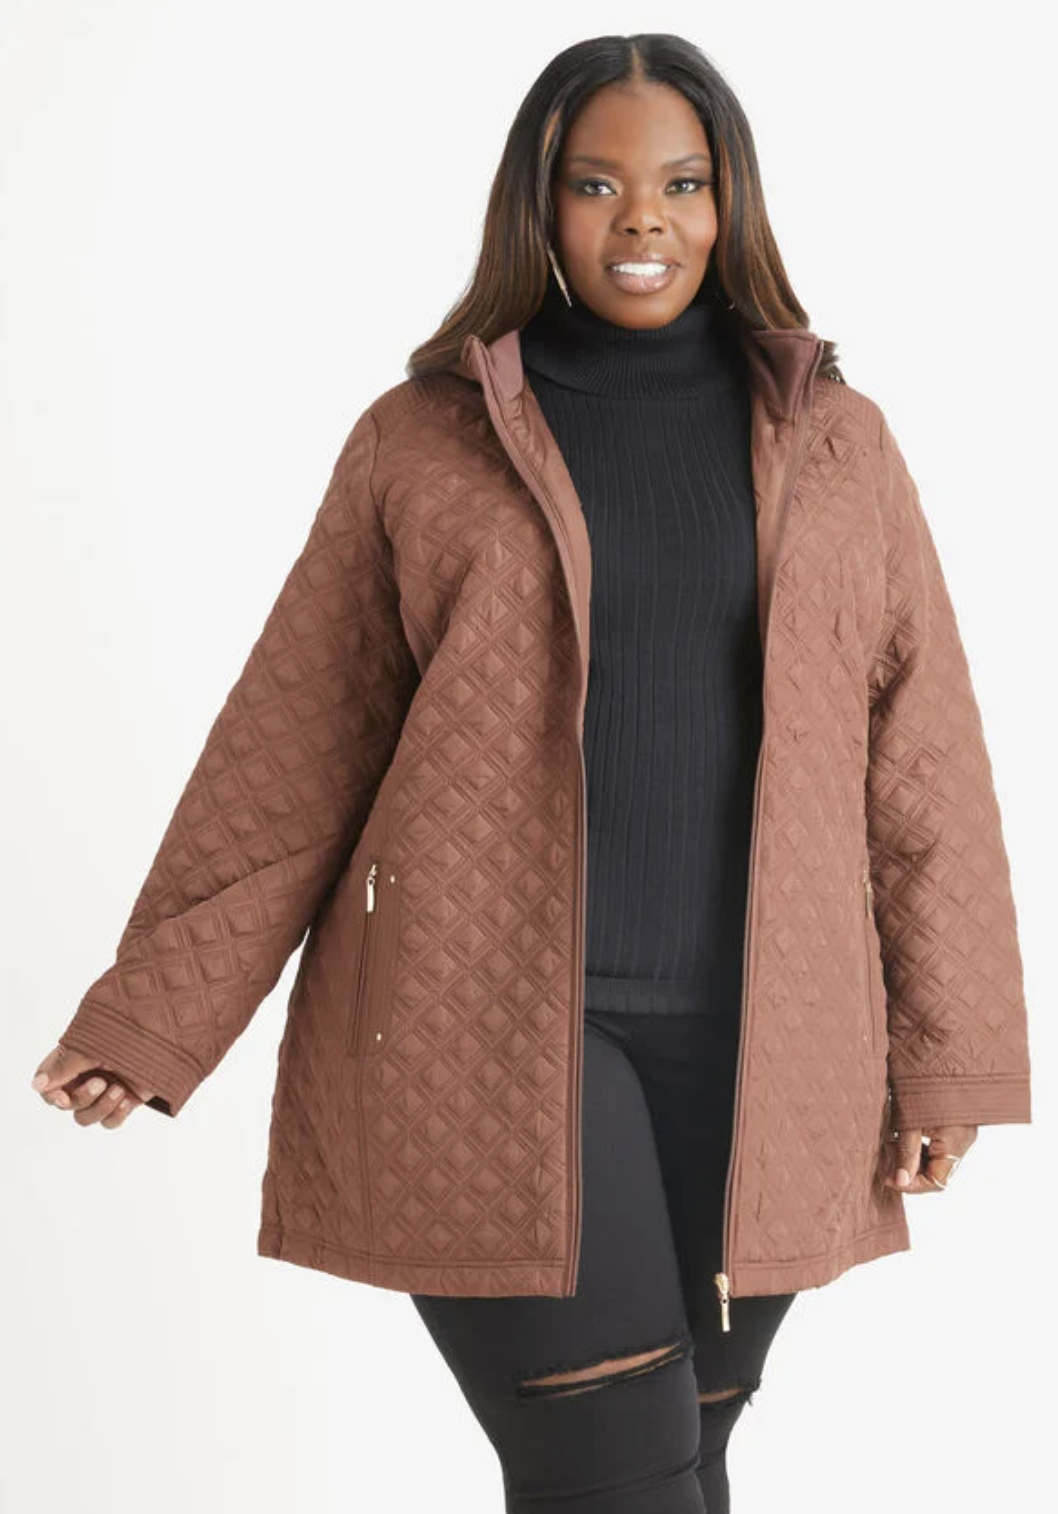 Model wearing the coat in brown